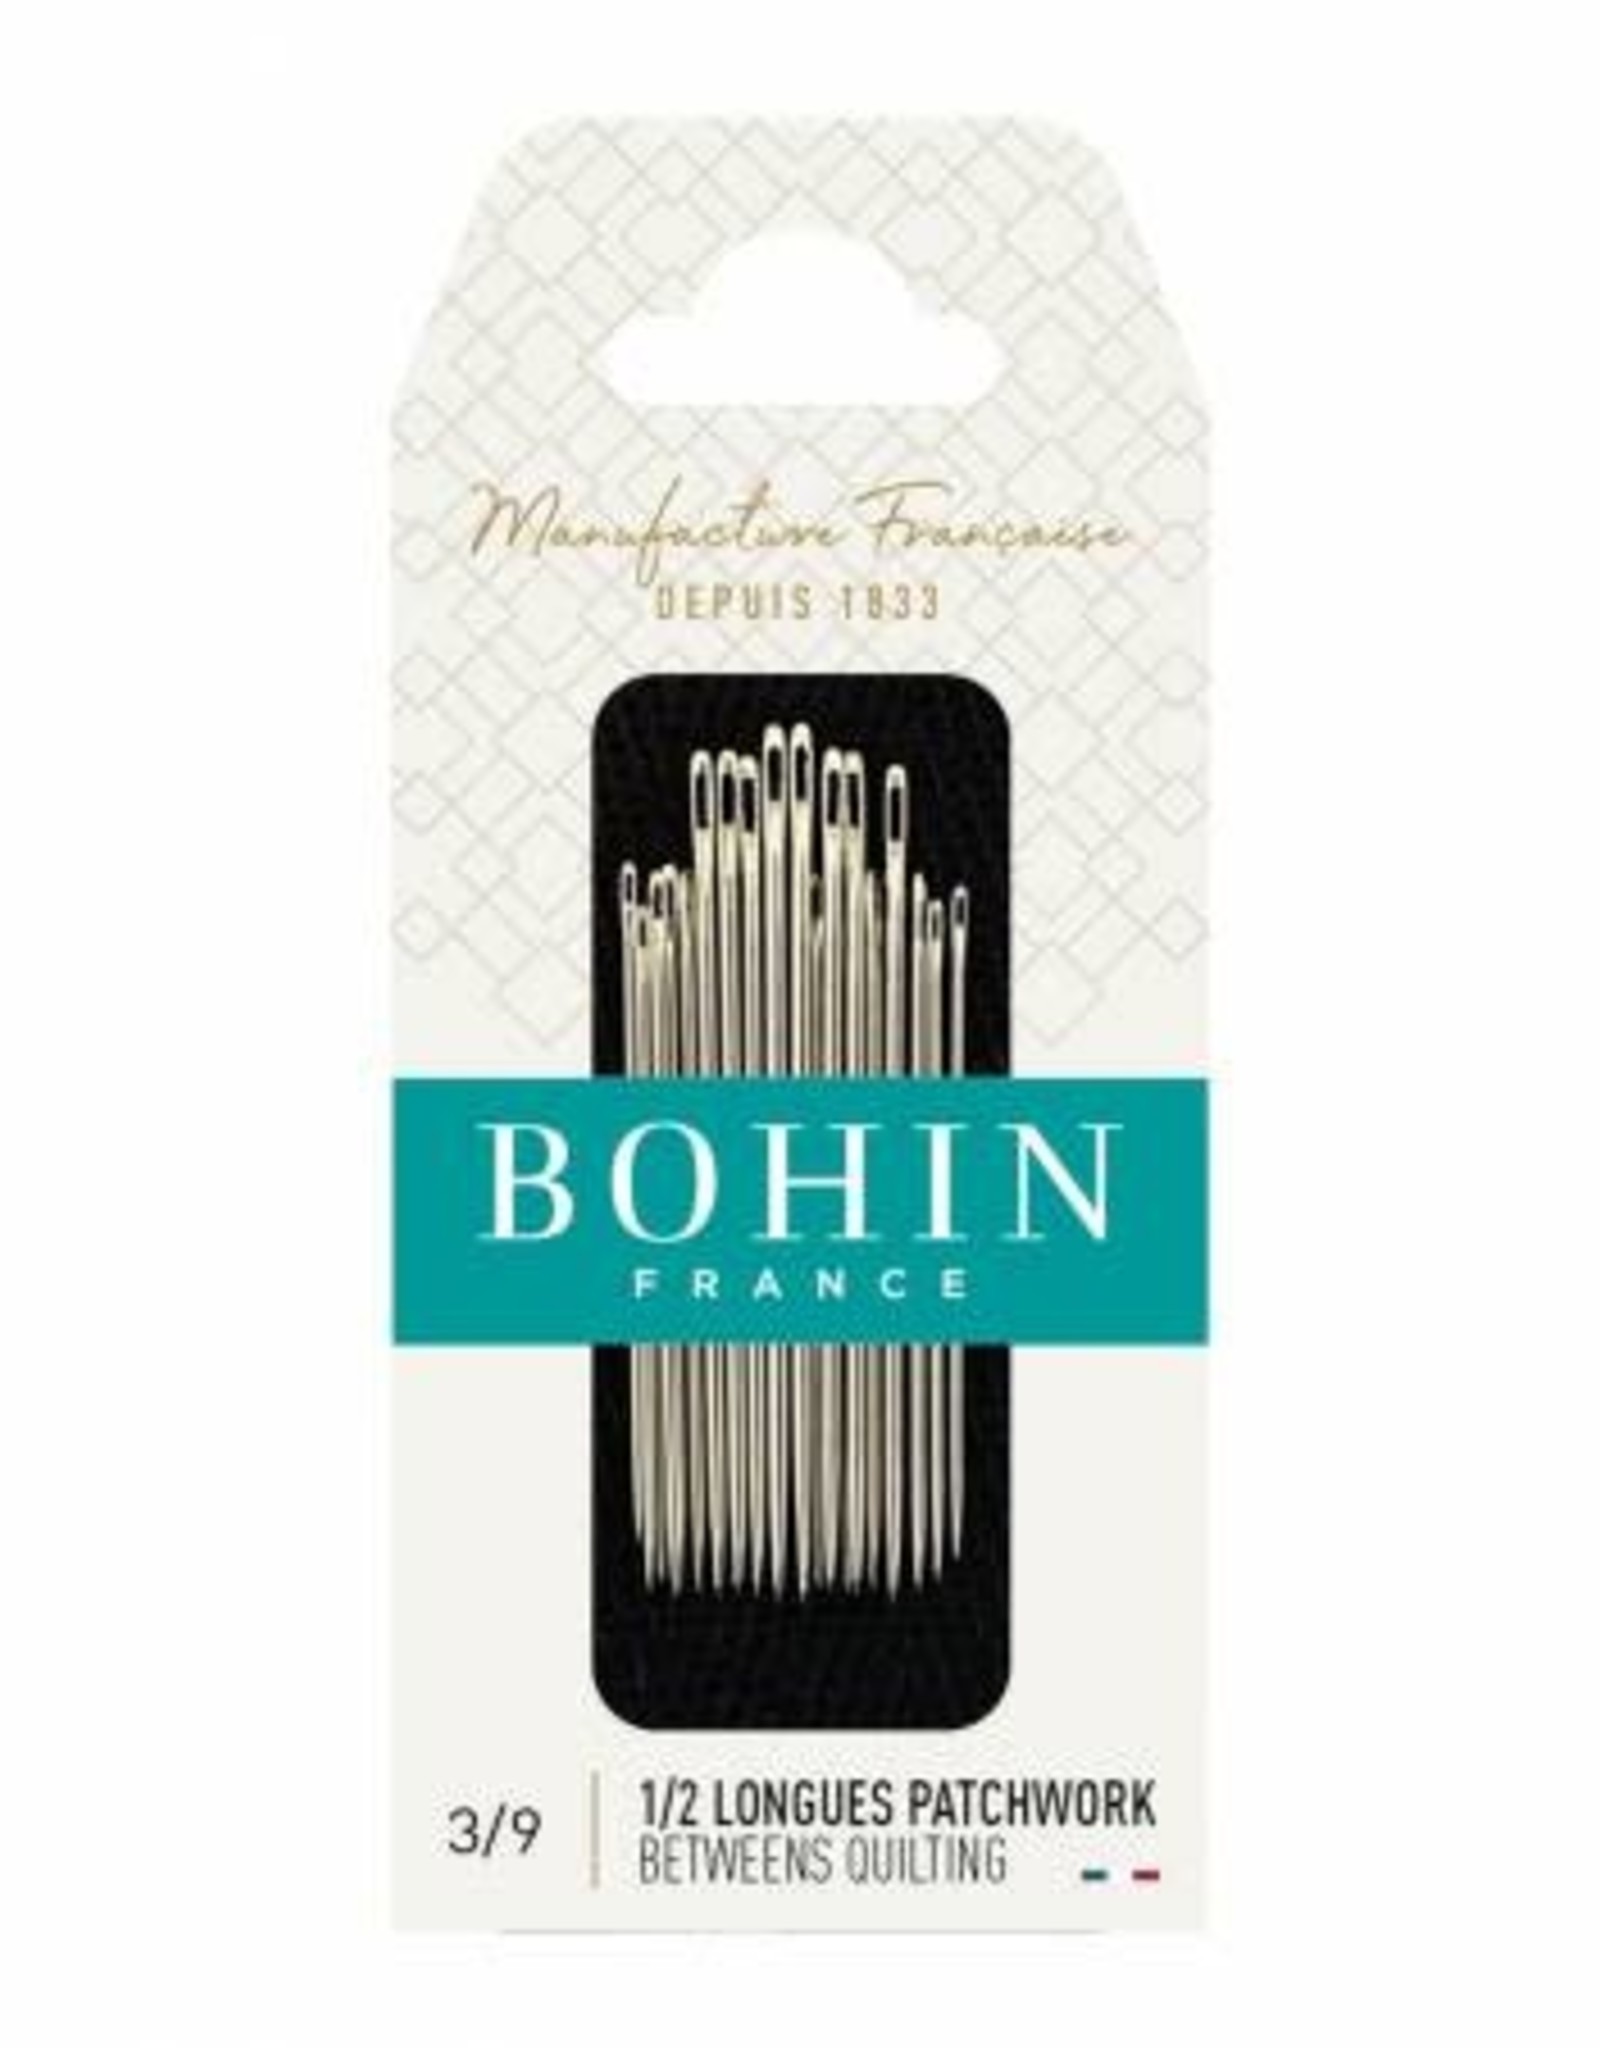 Bohin Between / Quilting Needles Assorted Sizes 3/9